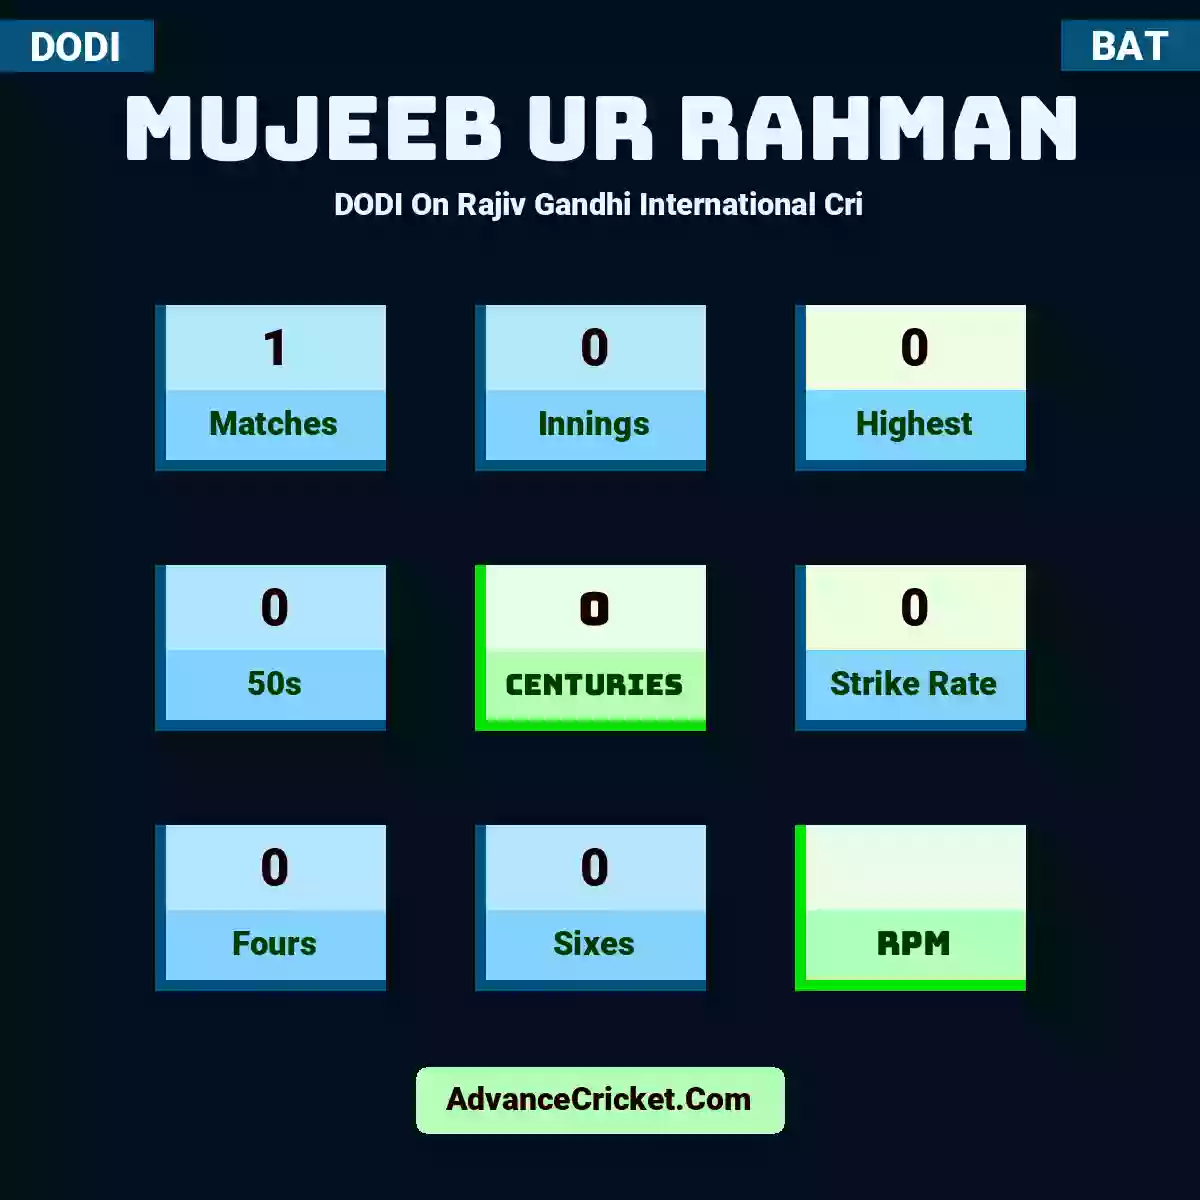 Mujeeb Ur Rahman DODI  On Rajiv Gandhi International Cri, Mujeeb Ur Rahman played 1 matches, scored 0 runs as highest, 0 half-centuries, and 0 centuries, with a strike rate of 0. M.Rahman hit 0 fours and 0 sixes.